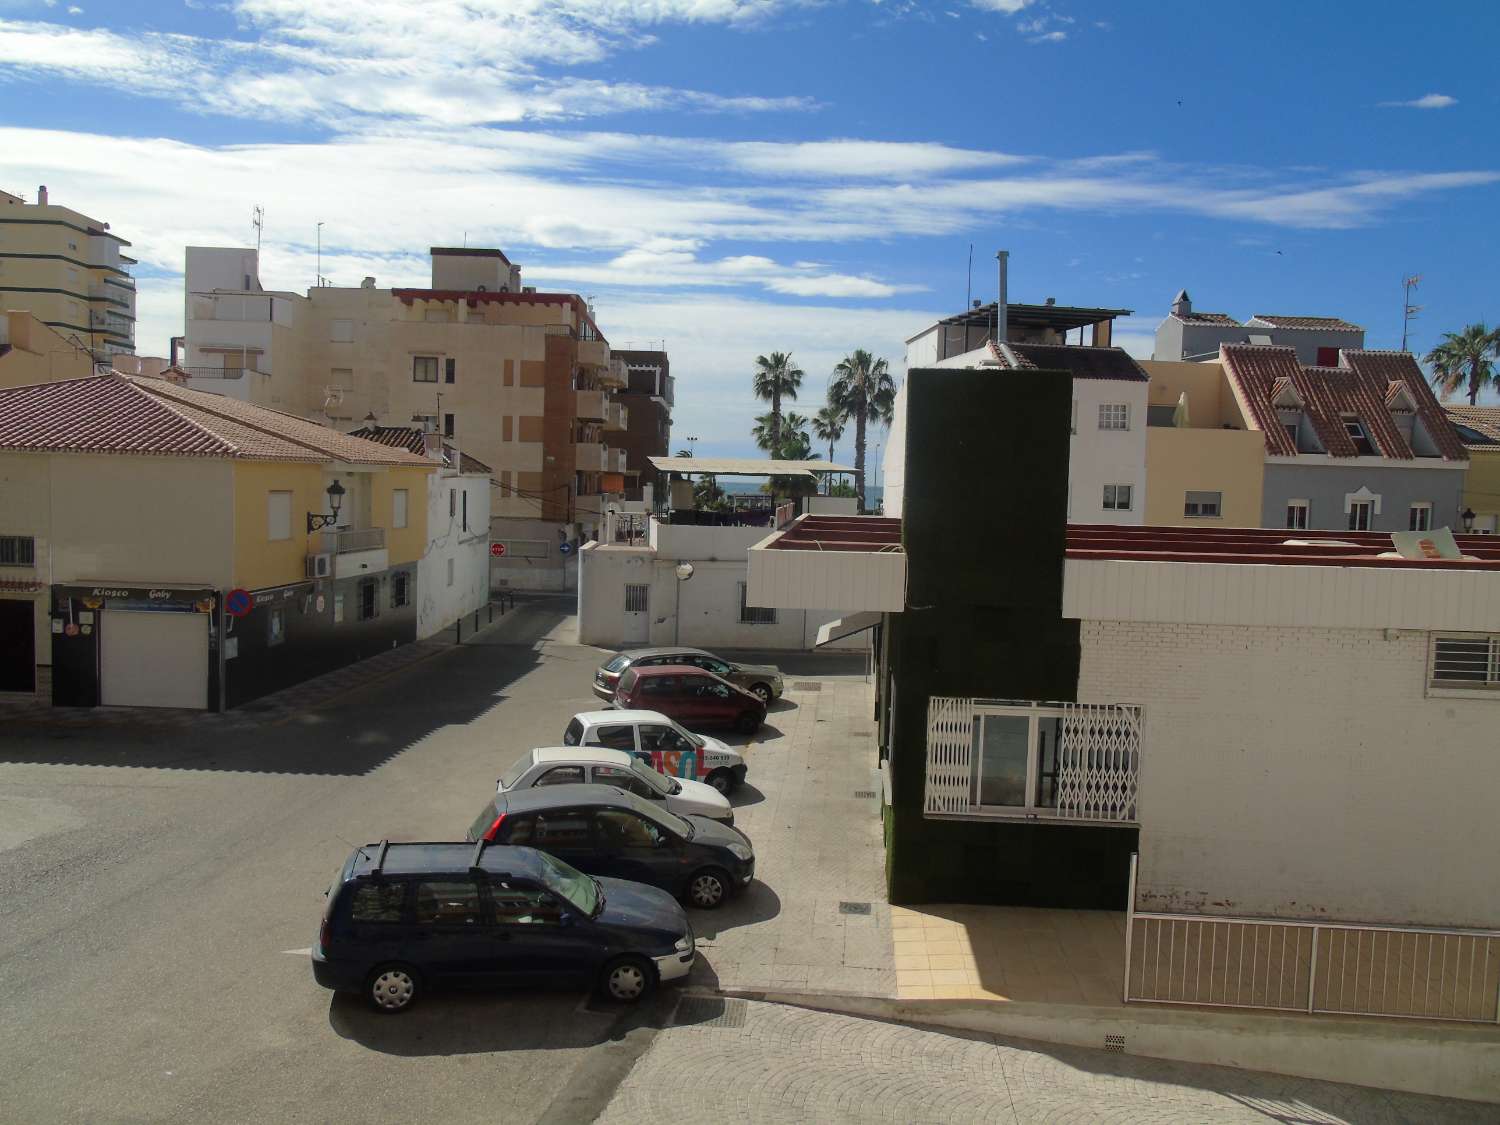 Lägenhet med 1 sovrum i centrum av Torre del Mar, med gemensam pool